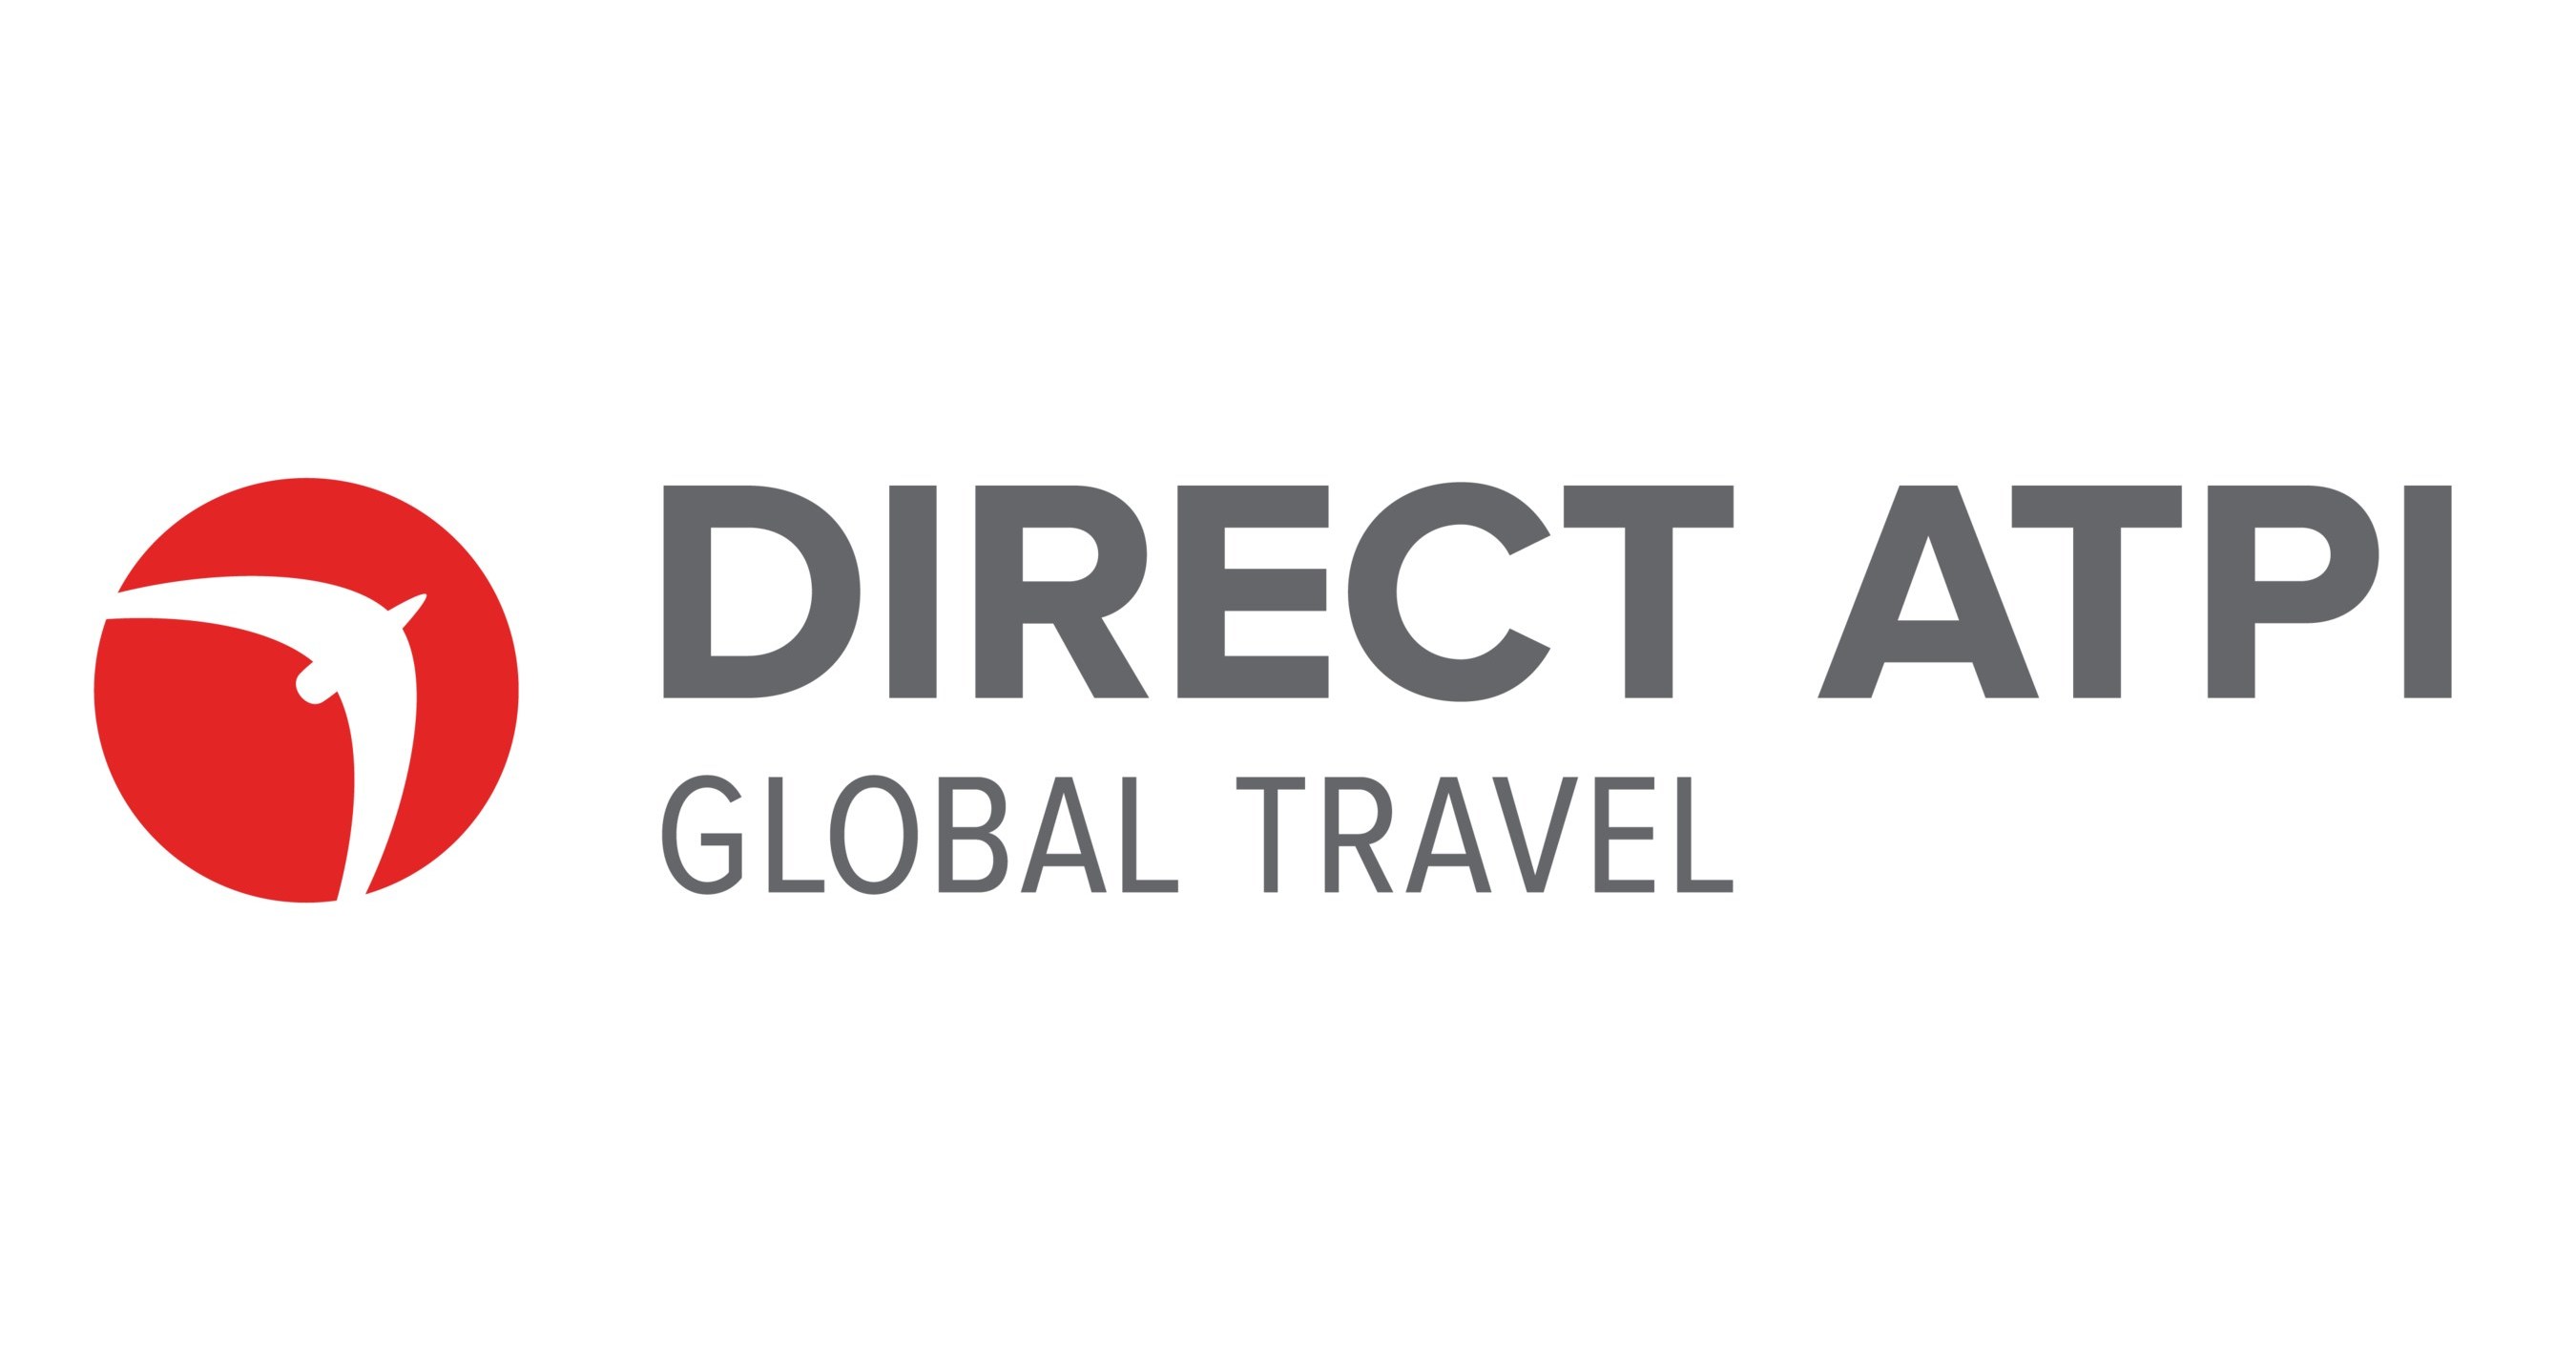 direct travel wiki